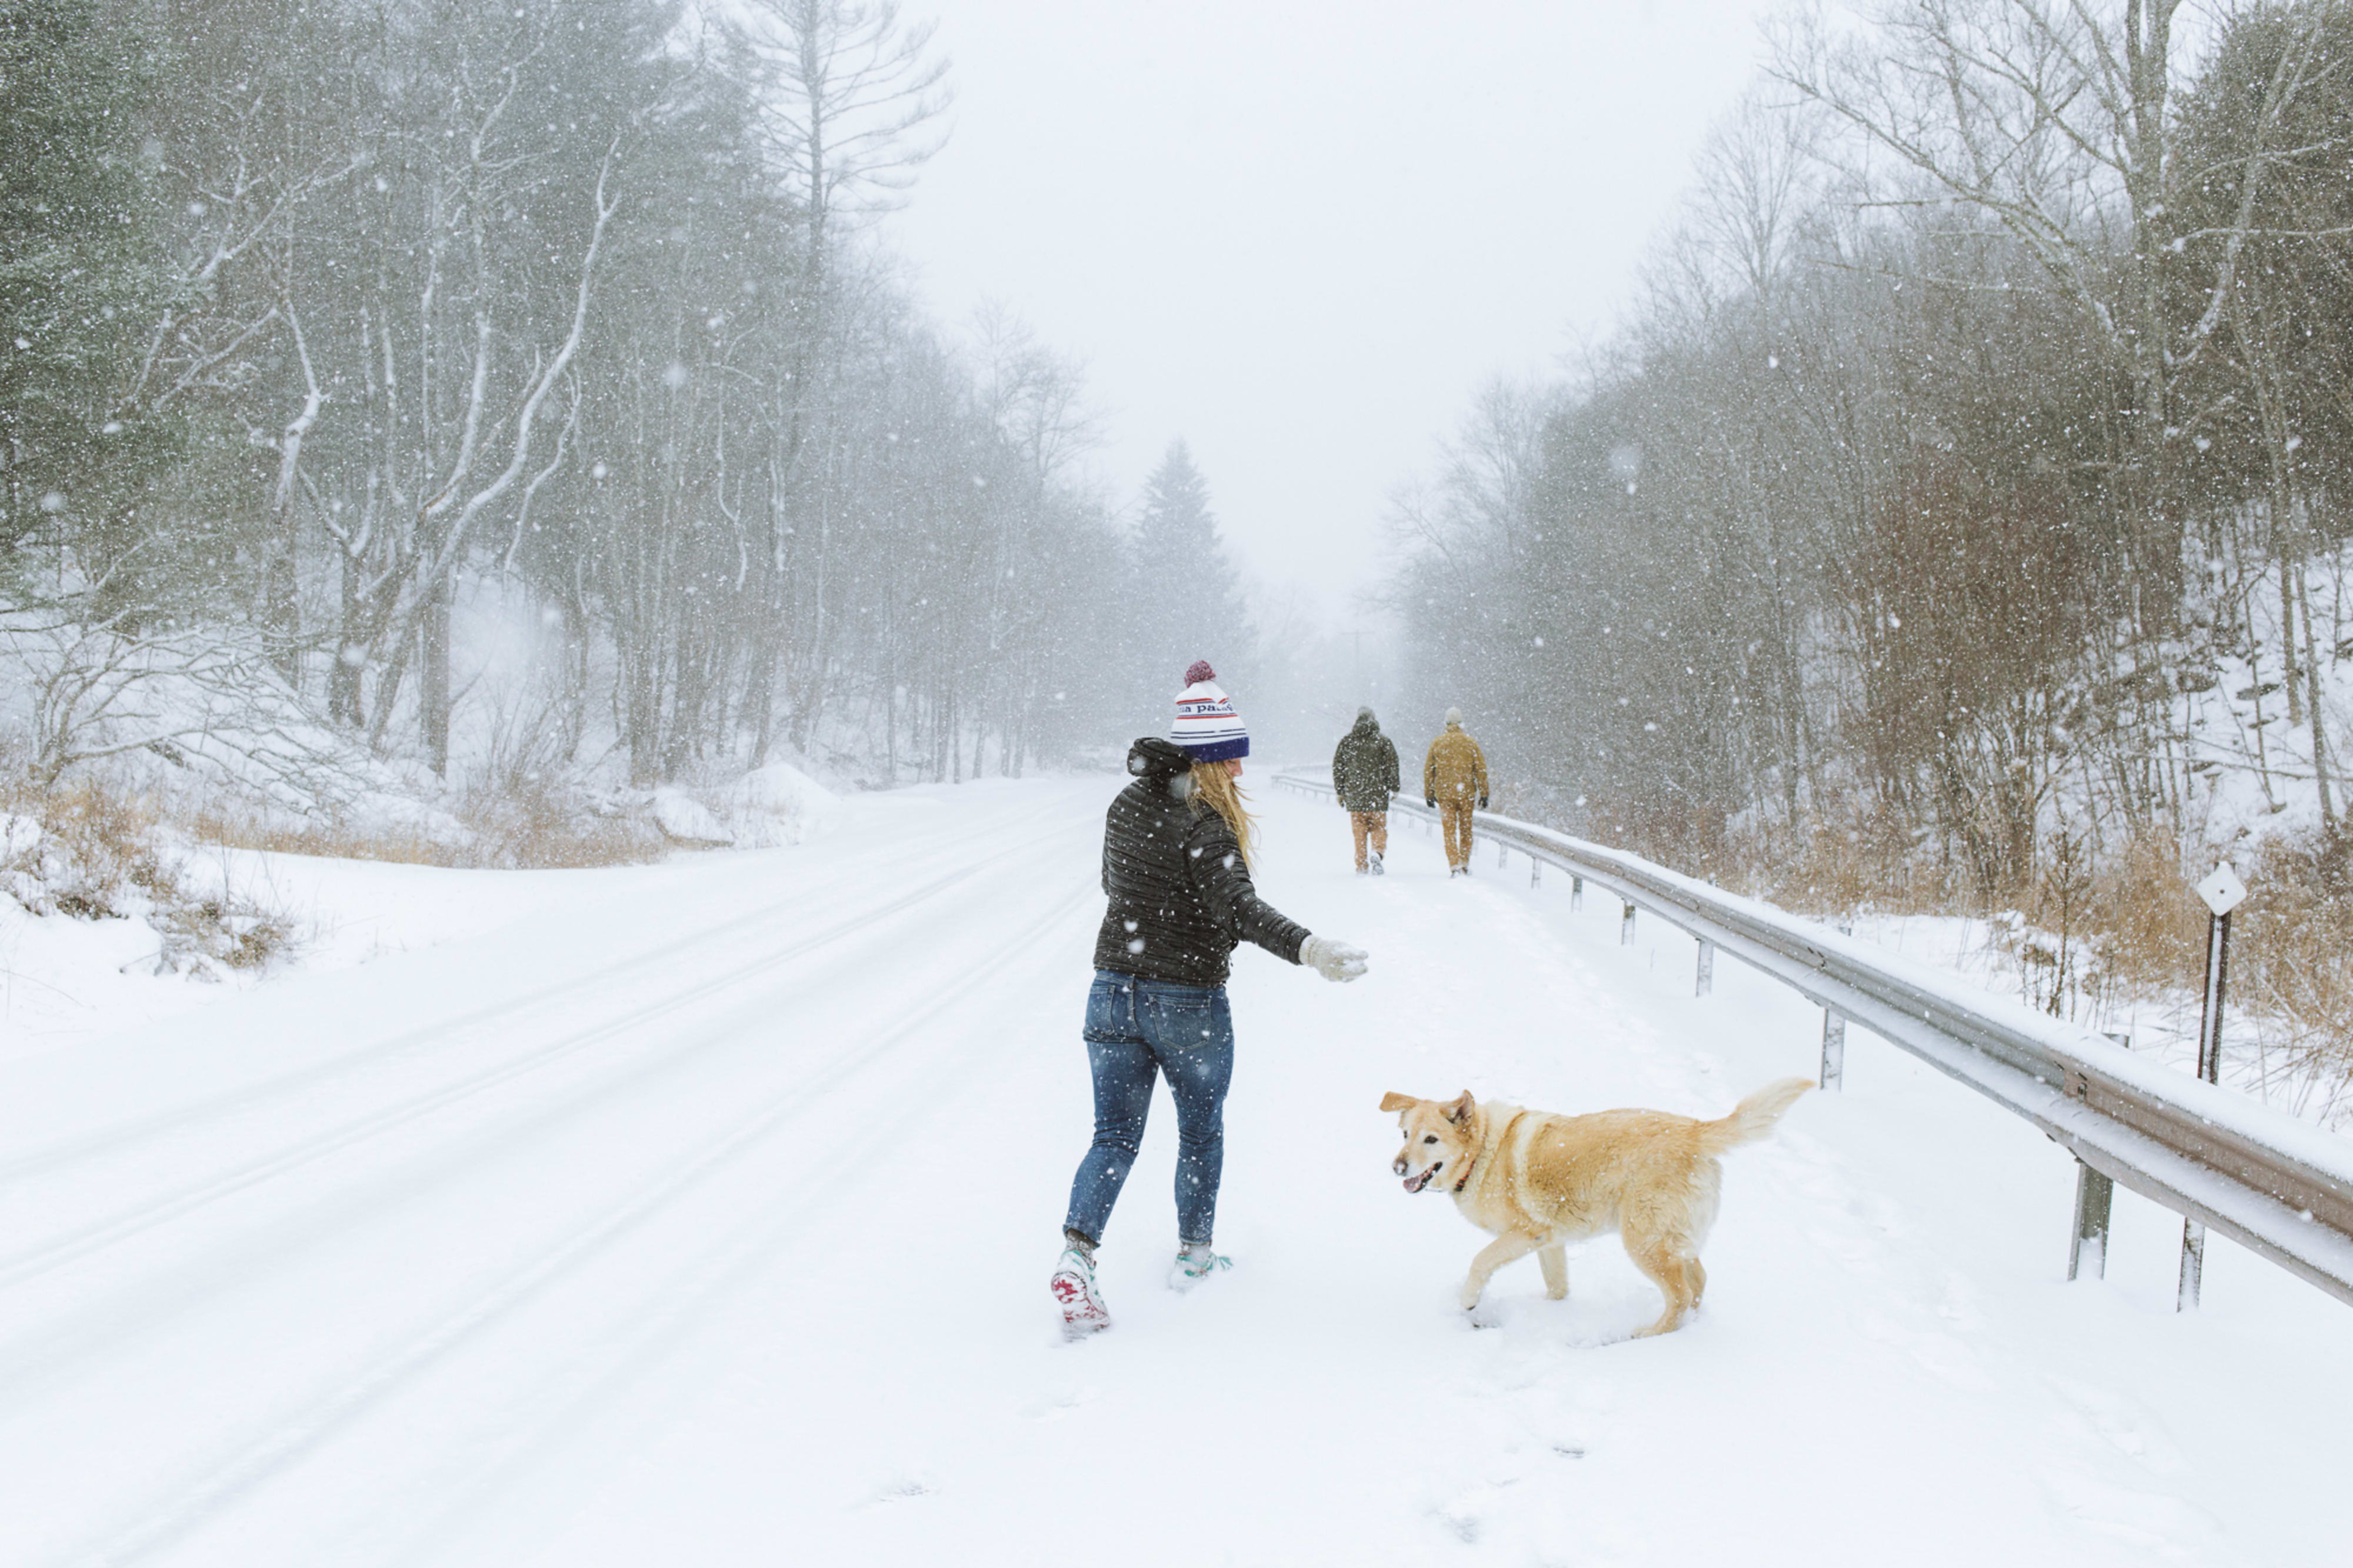 The Catskills in winter